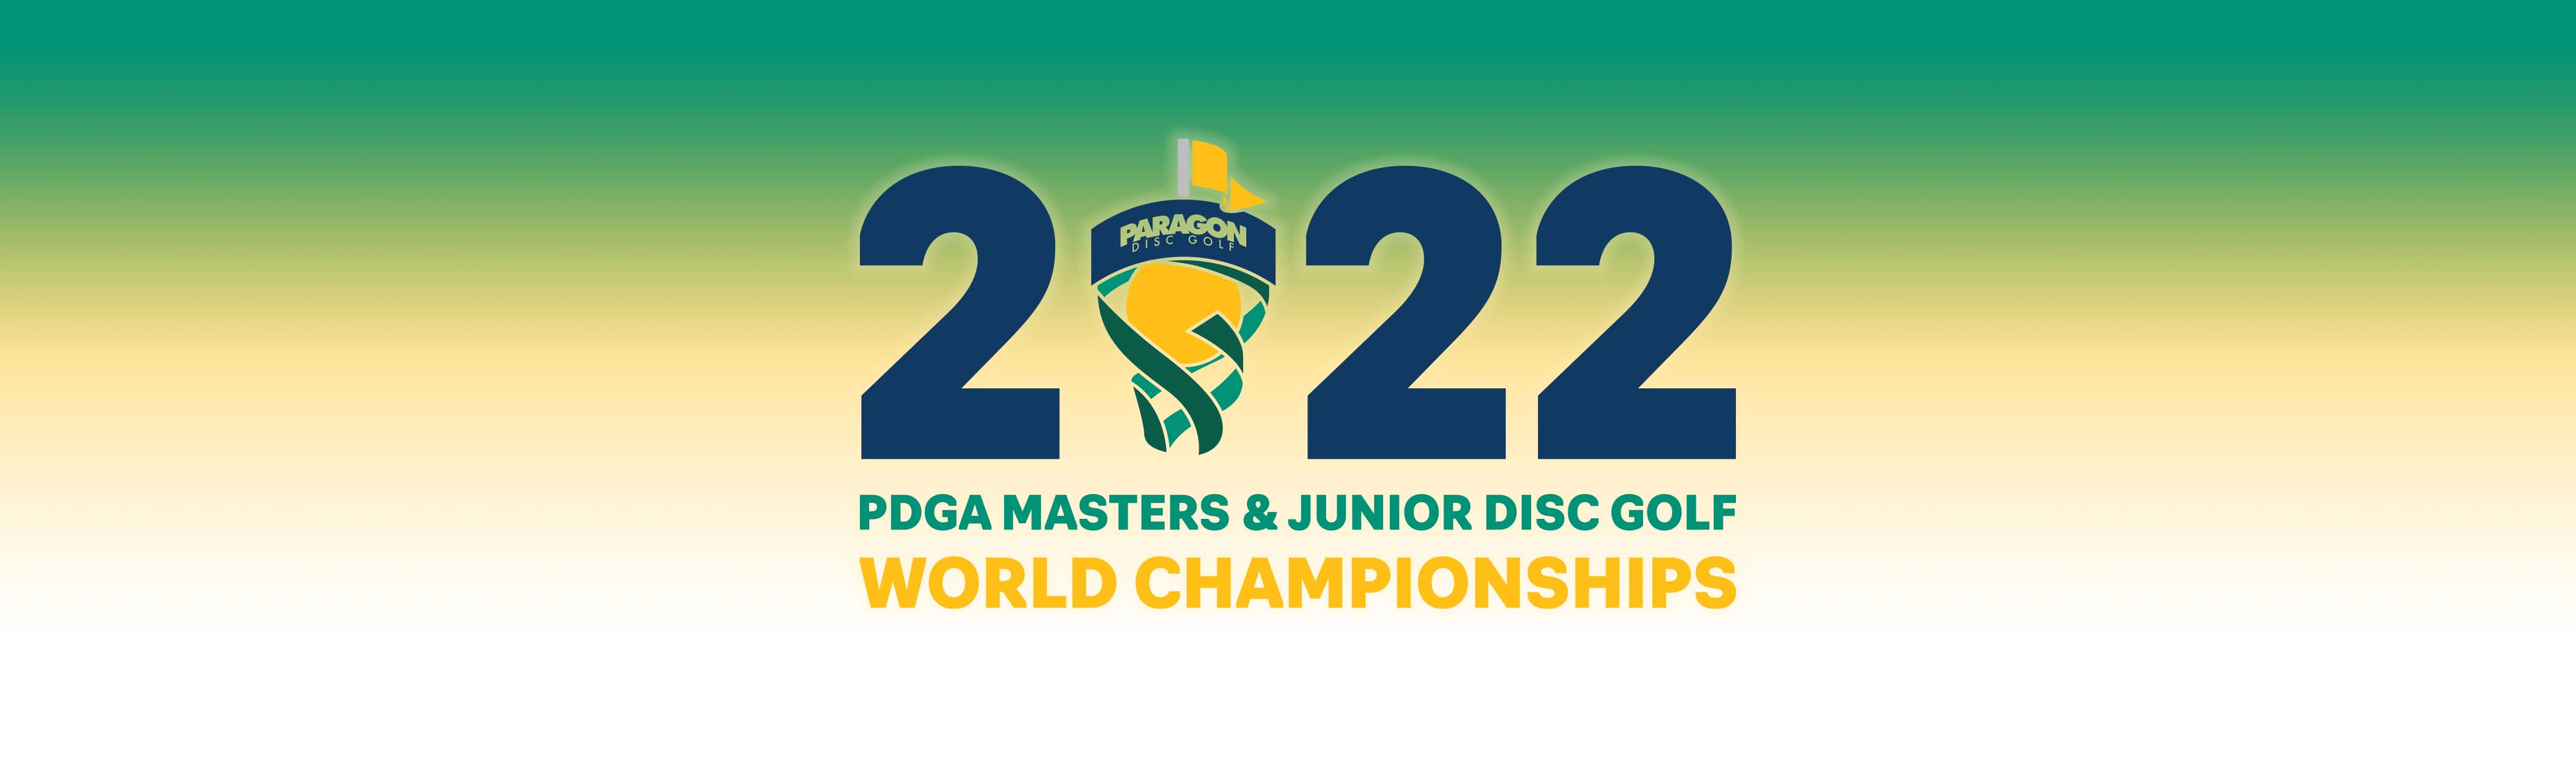 2022 PDGA Masters Disc Golf World Championships Professional Disc